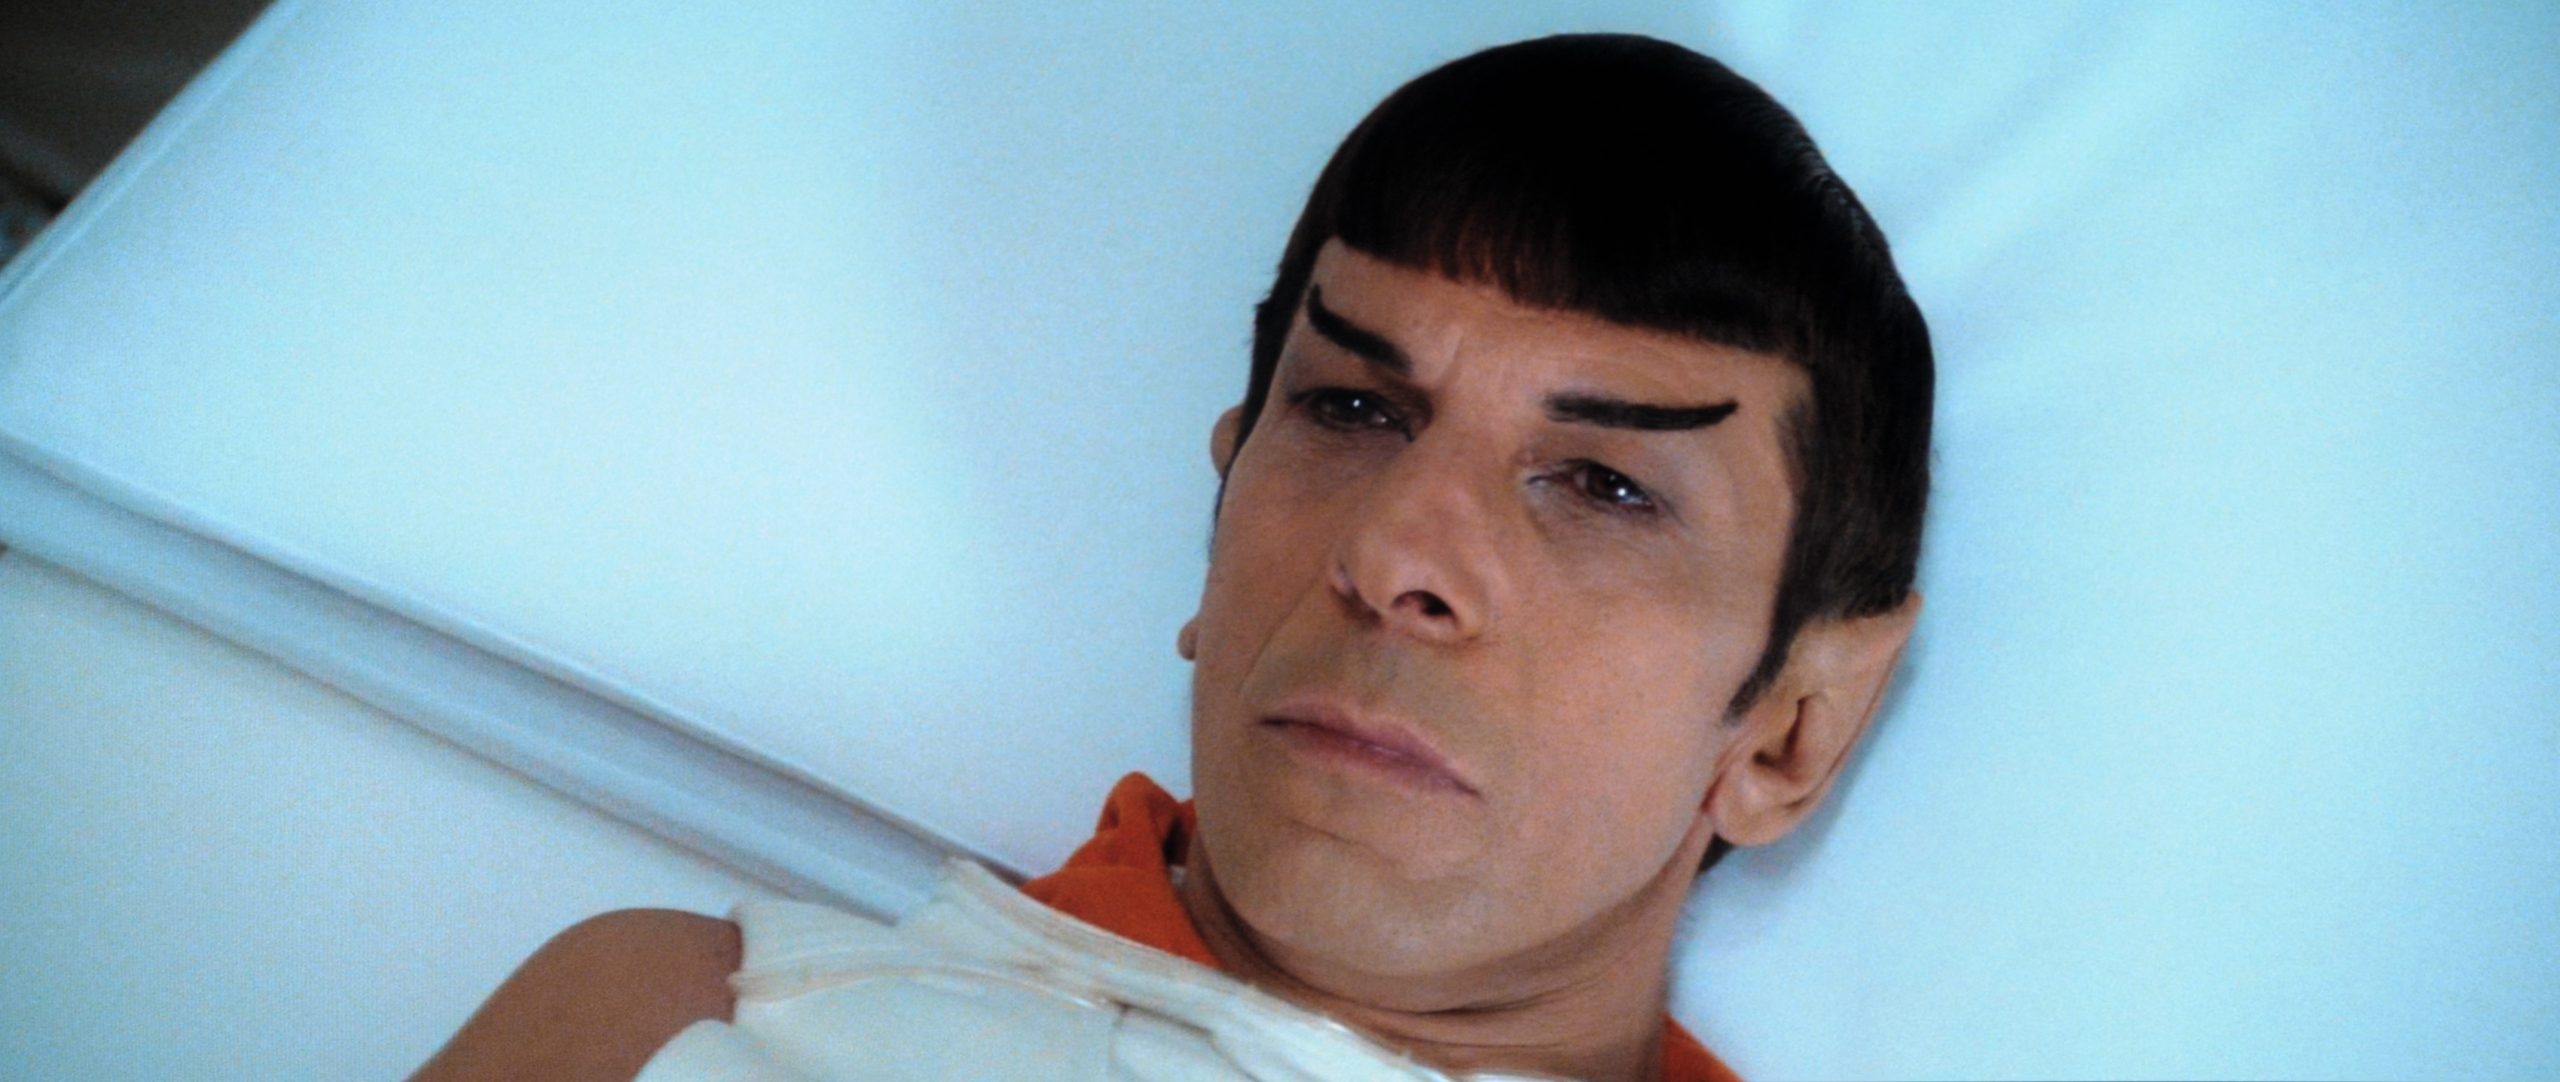 Spock, UHD Blu-ray, Star Trek, Review, 2560x1090 Dual Screen Desktop